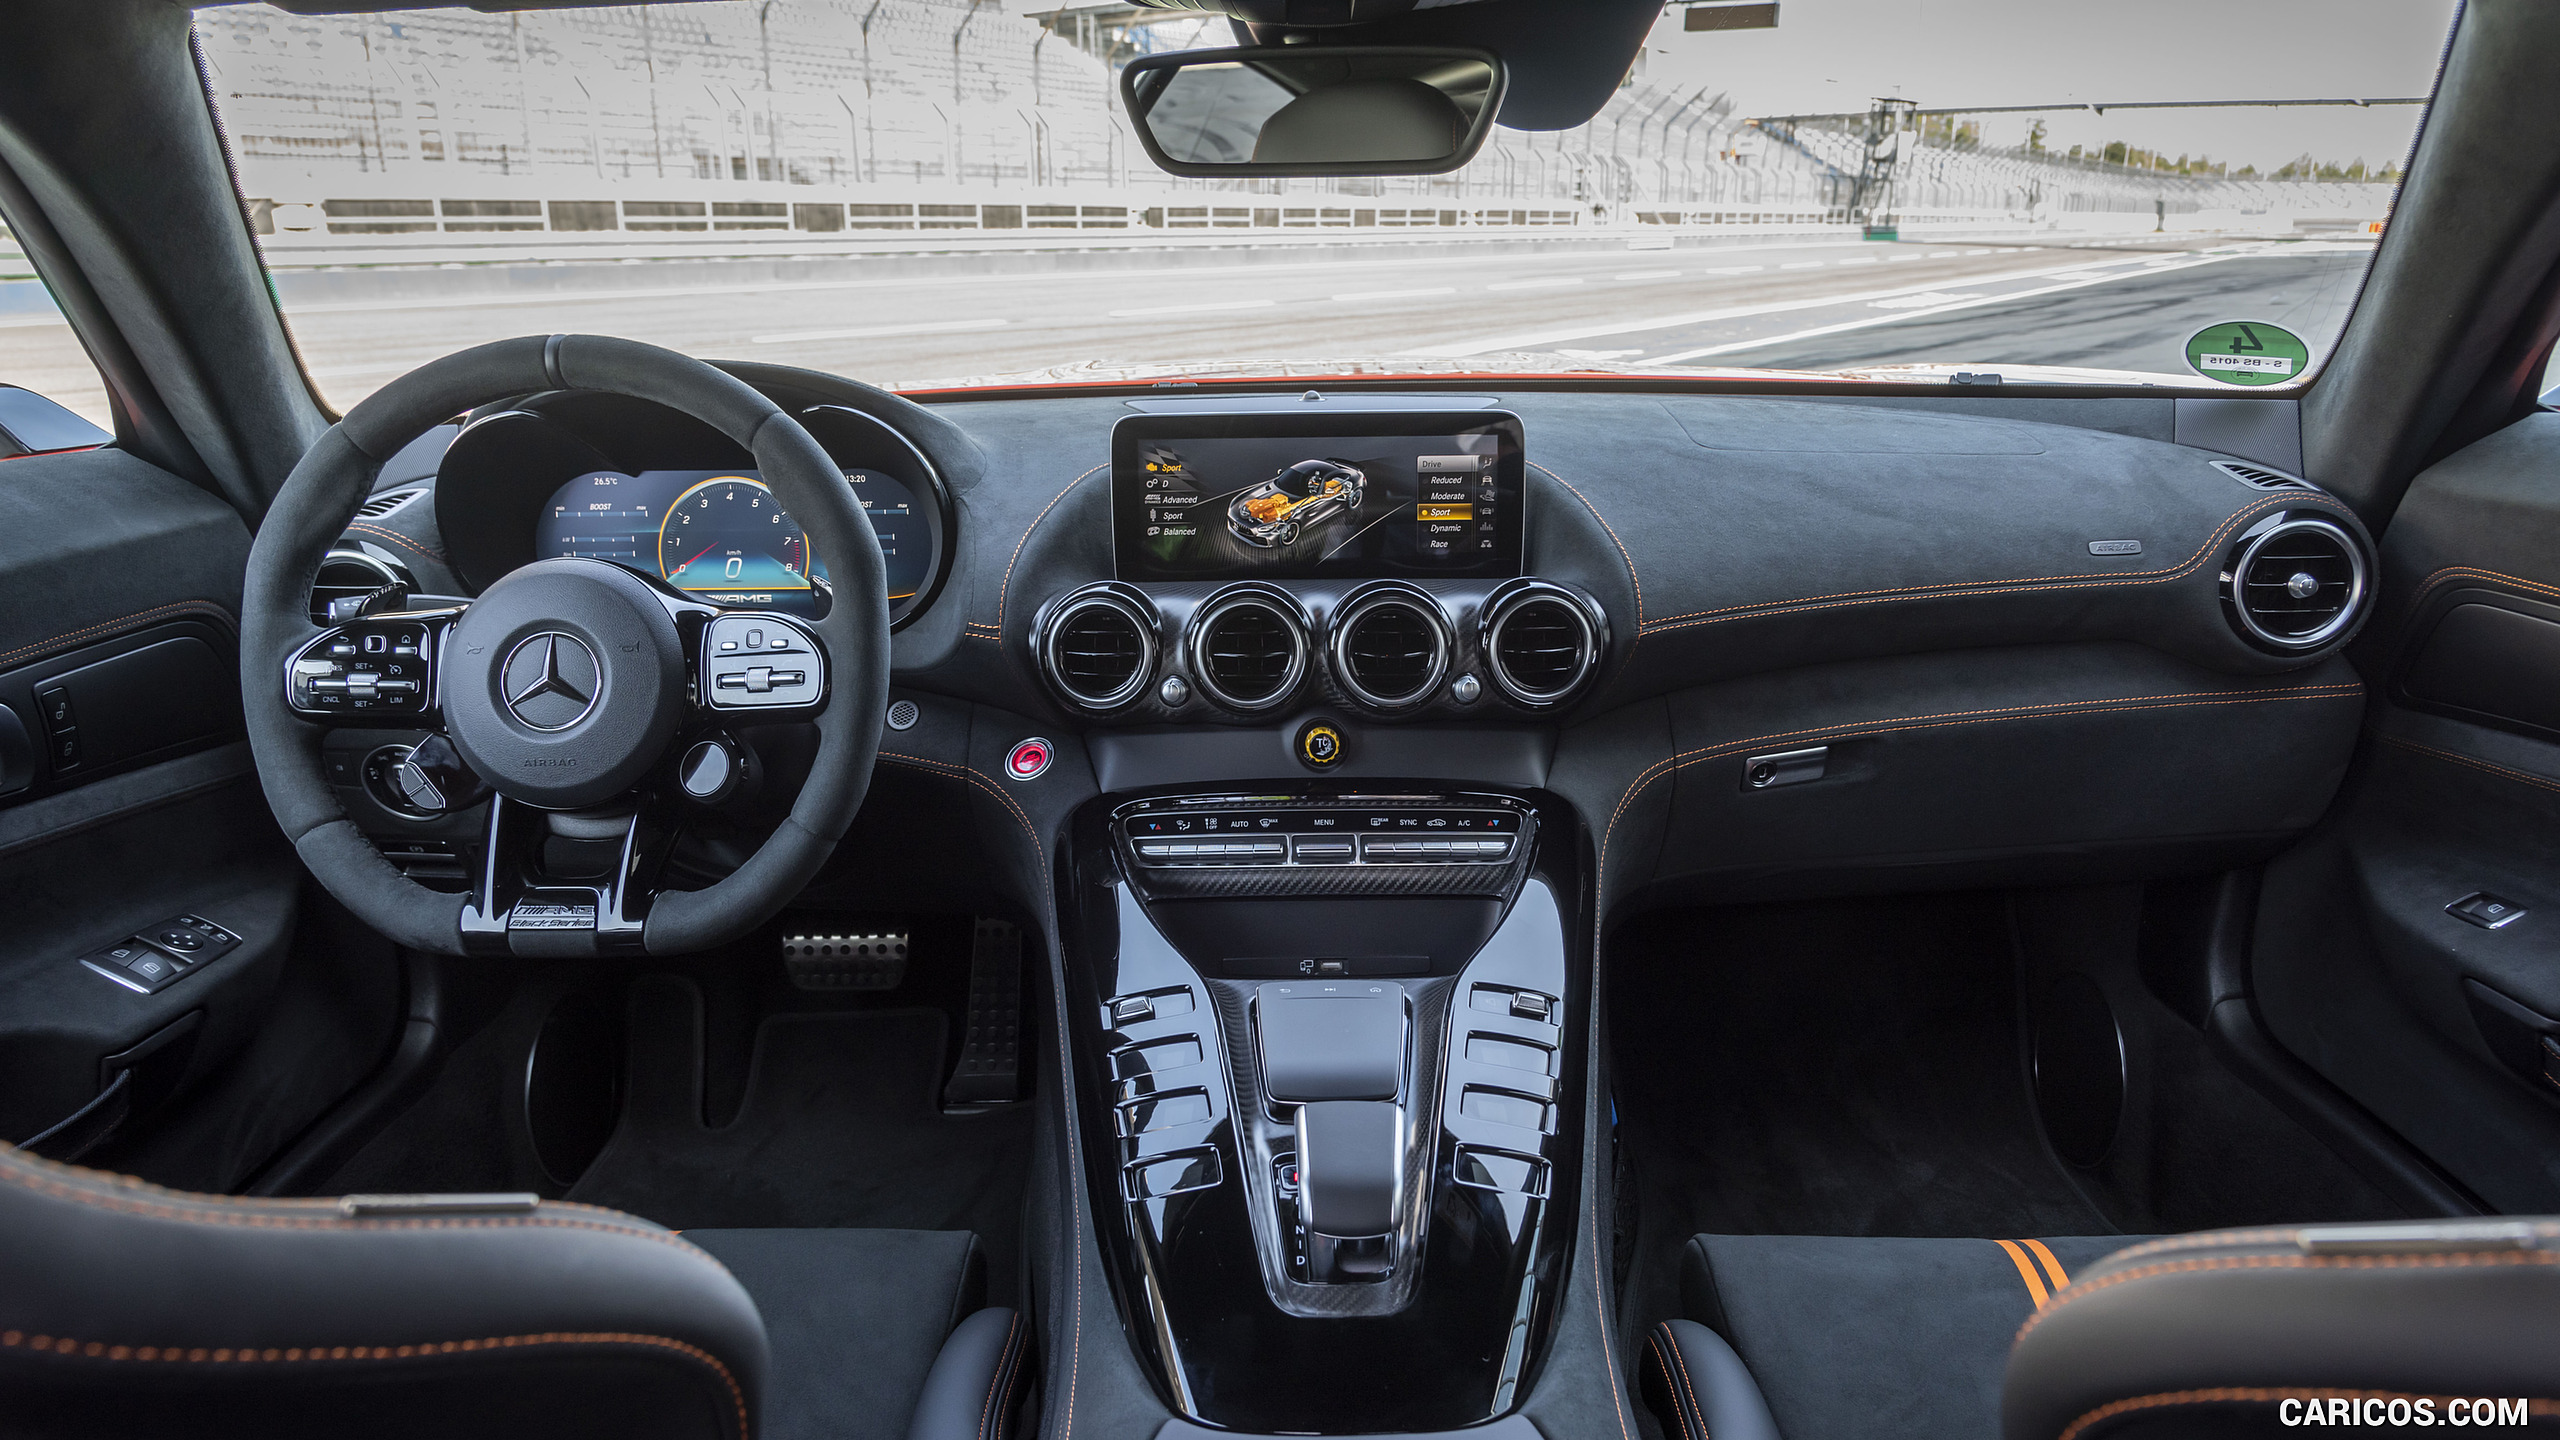 2021 Mercedes-AMG GT Black Series - Interior, Cockpit, #194 of 215